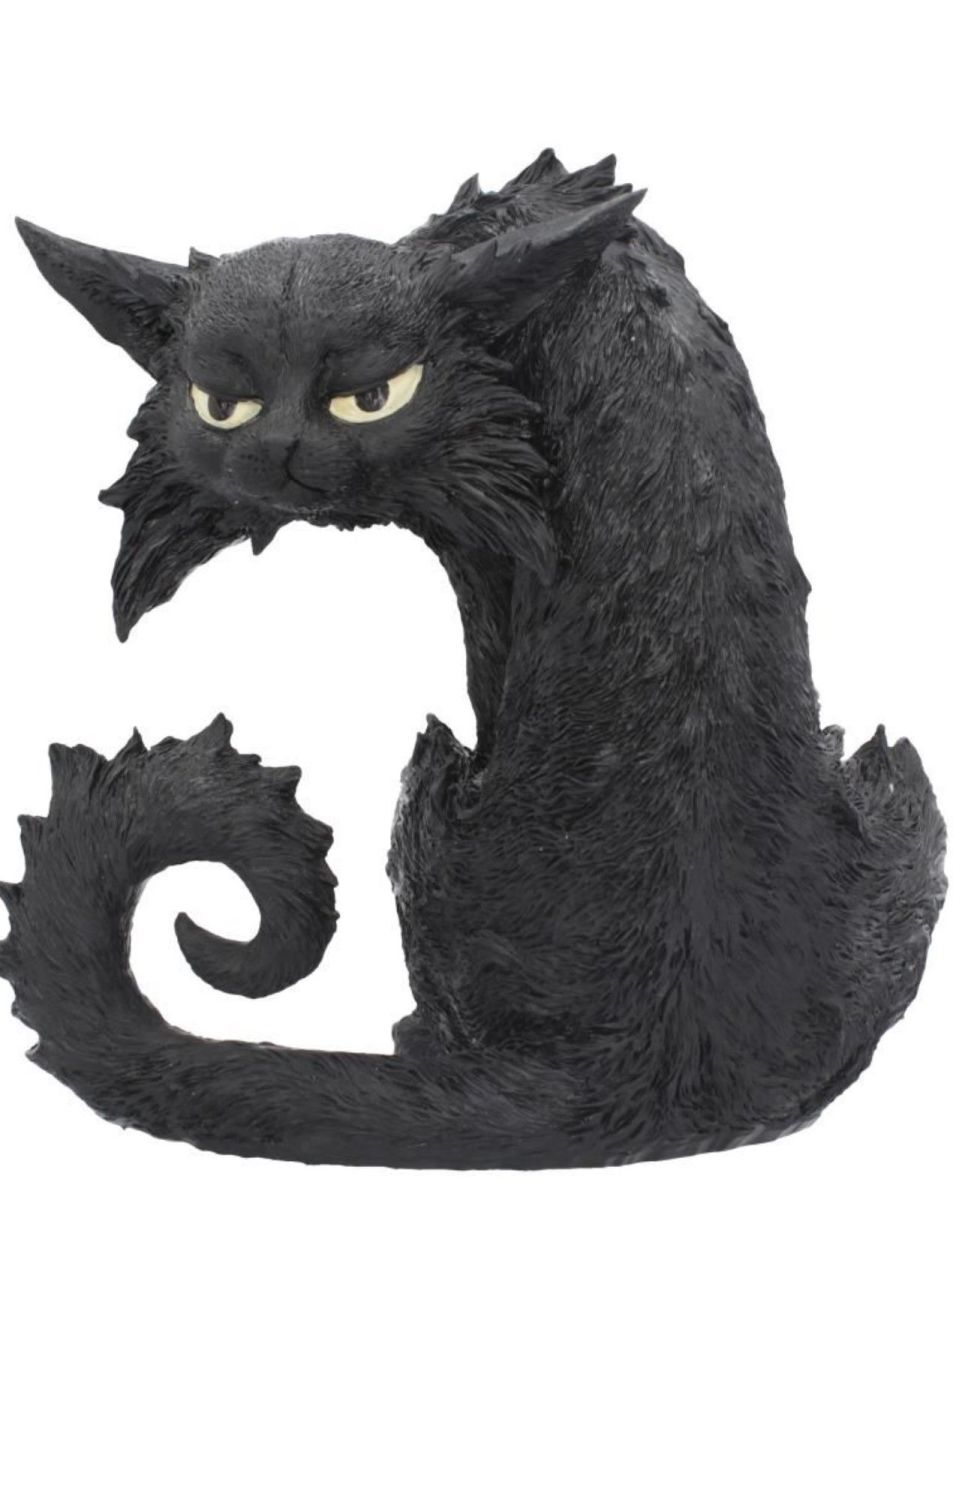 Nemesis now Spite cat figurine RRP £29.99